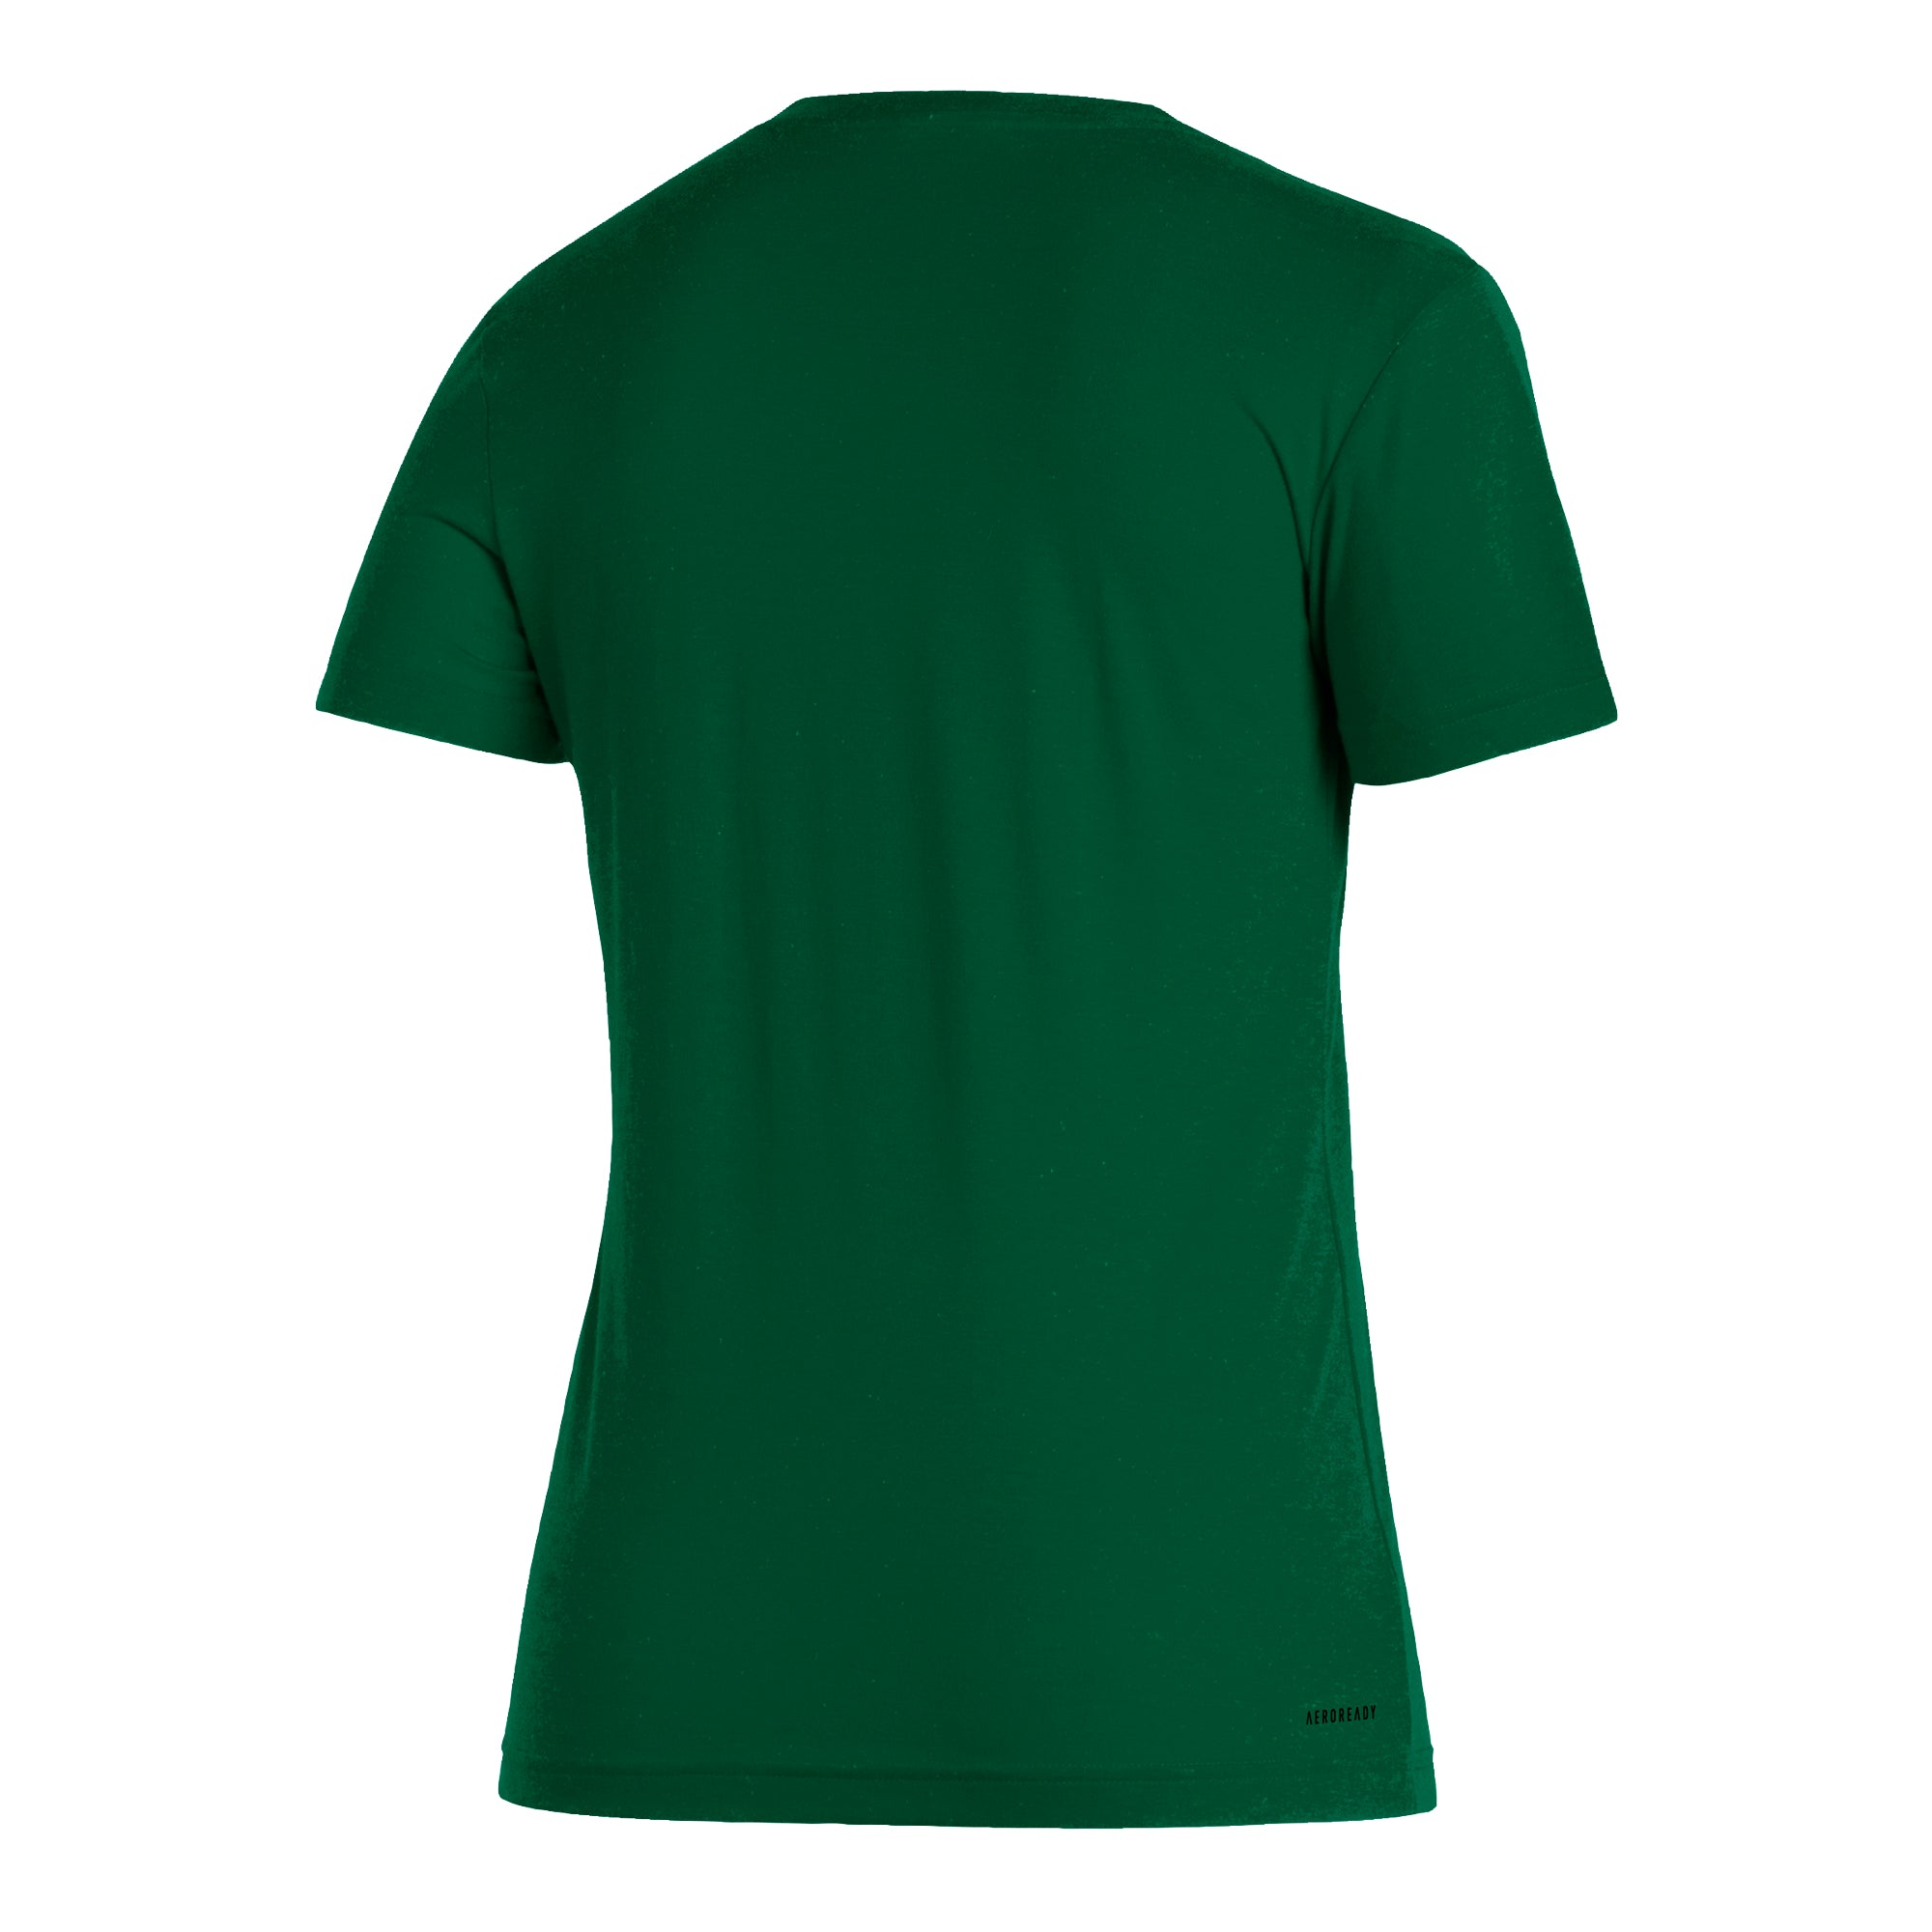 New Era Women's Miami Marlins Rhinestone V-Neck Short-Sleeve T-Shirt Onyx XSmall